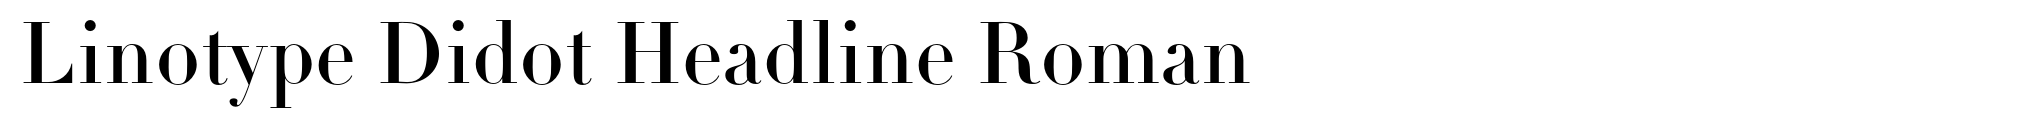 Linotype Didot Headline Roman image